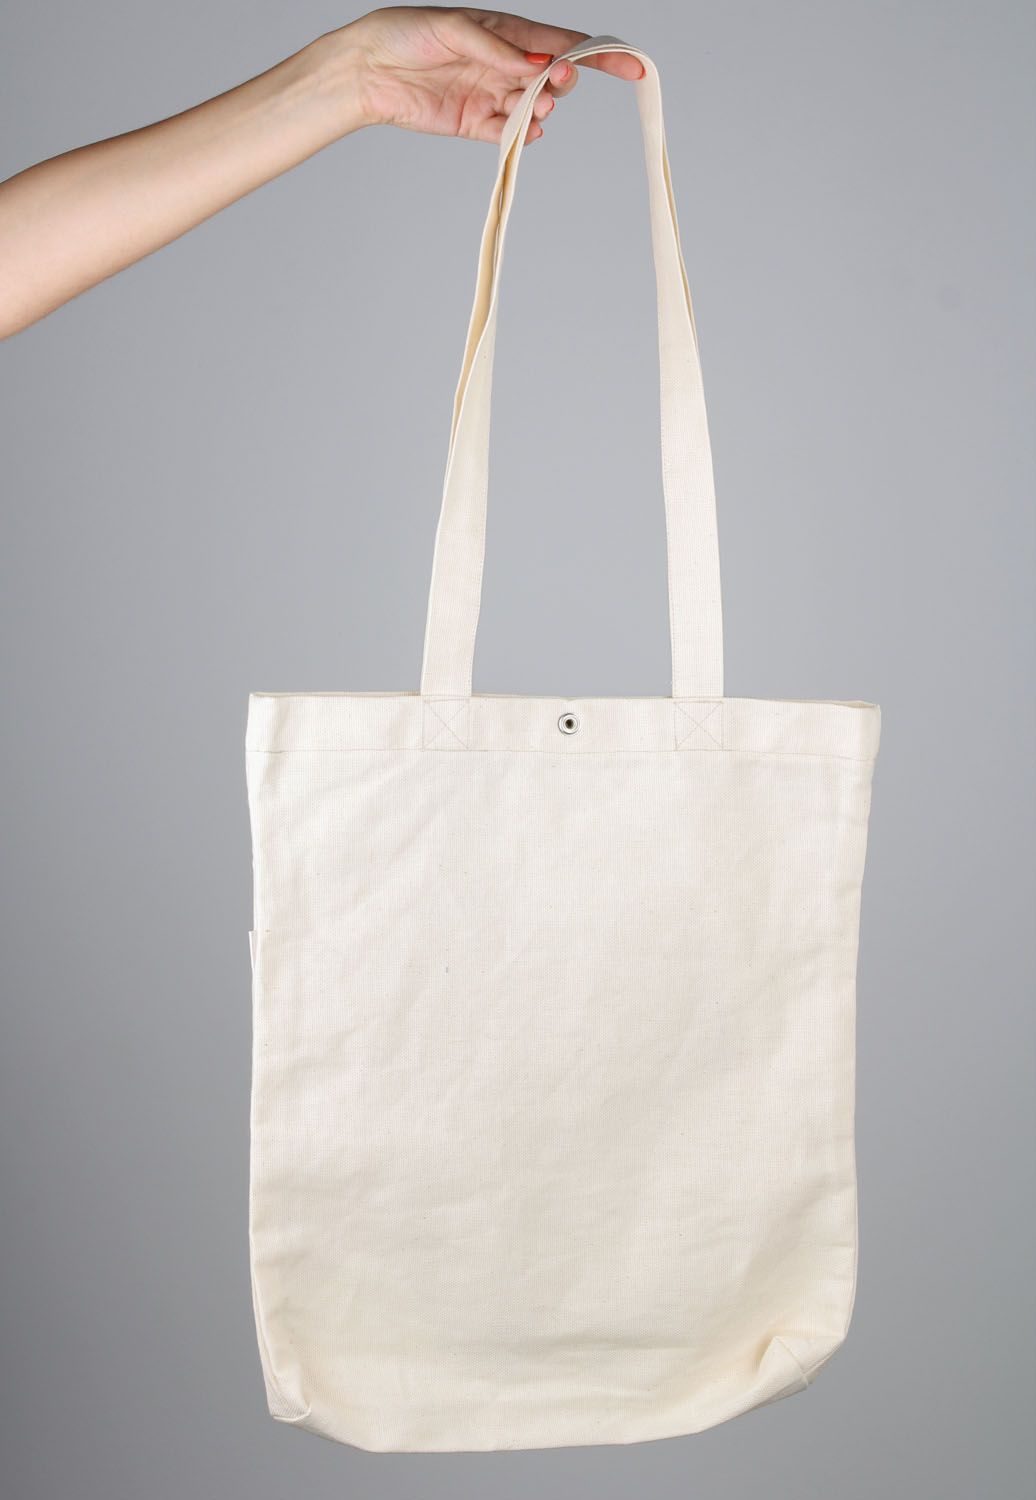 Текстильная эко-сумка Сова фото 3